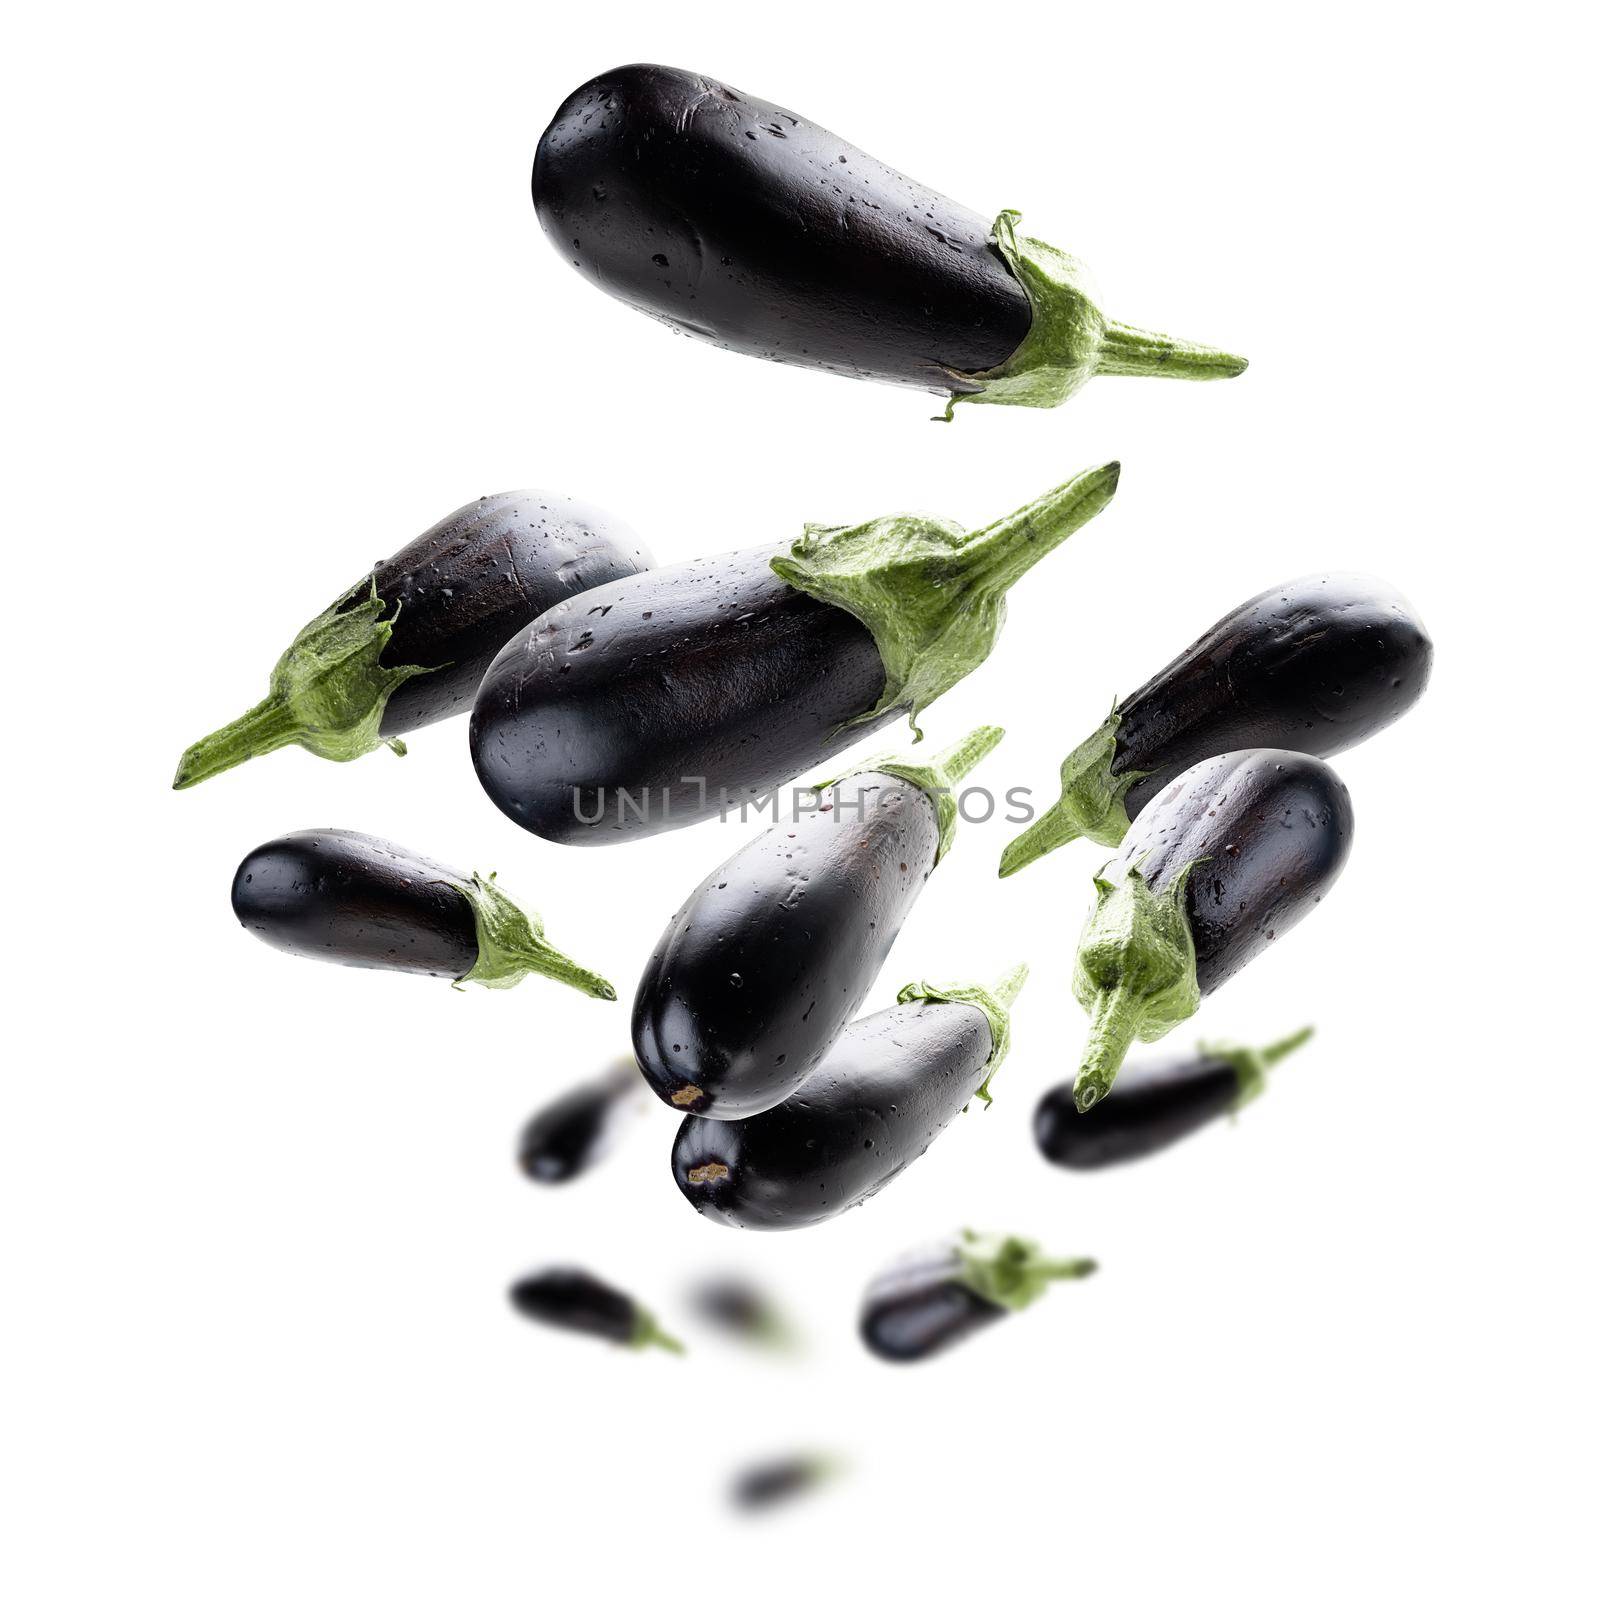 Ripe eggplants levitate on a white background.